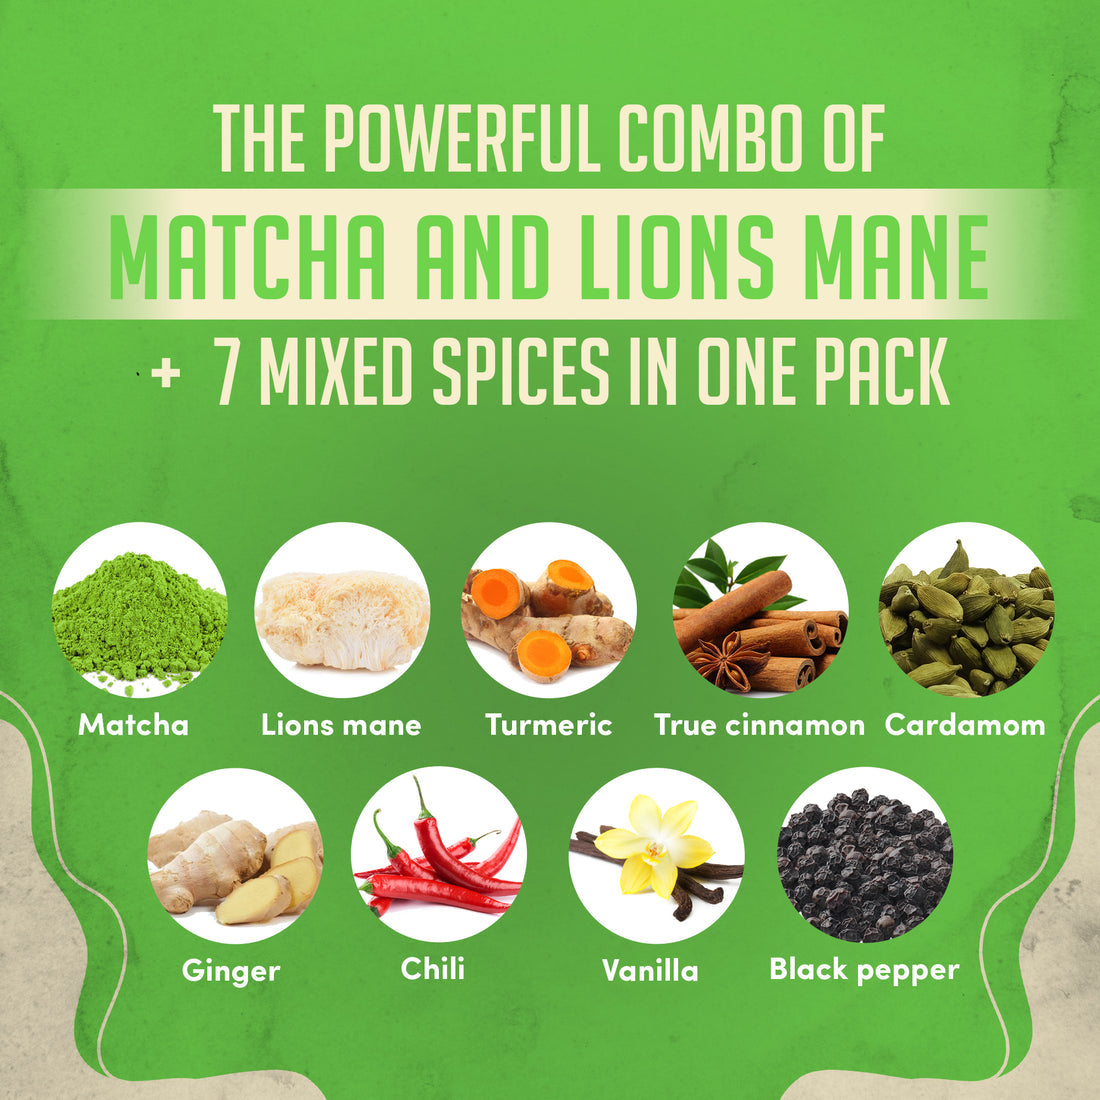 Nature's Harvest Organic Matcha Magic Mix 52.5g